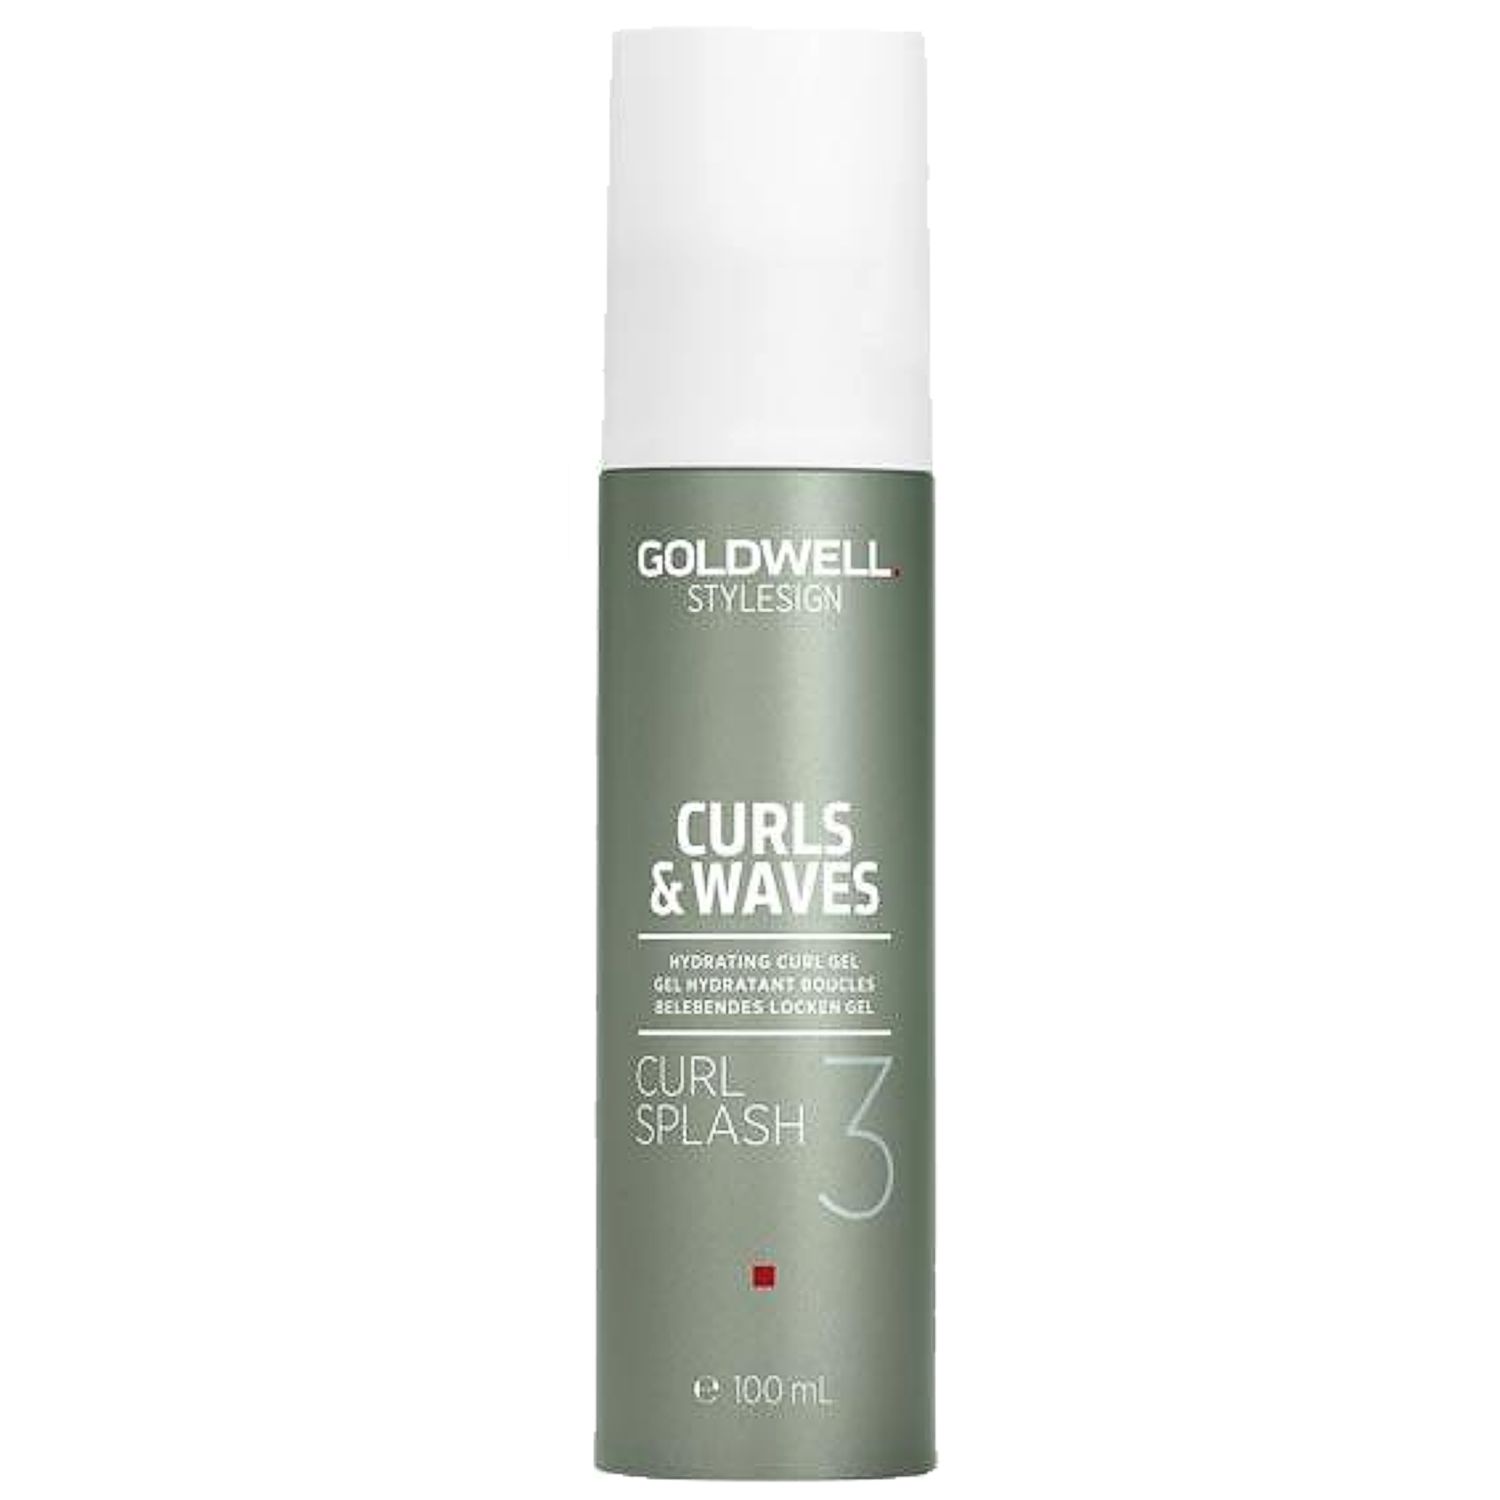 GOLDWELL Style Sign Curls & Waves Curl Splash 100 ml